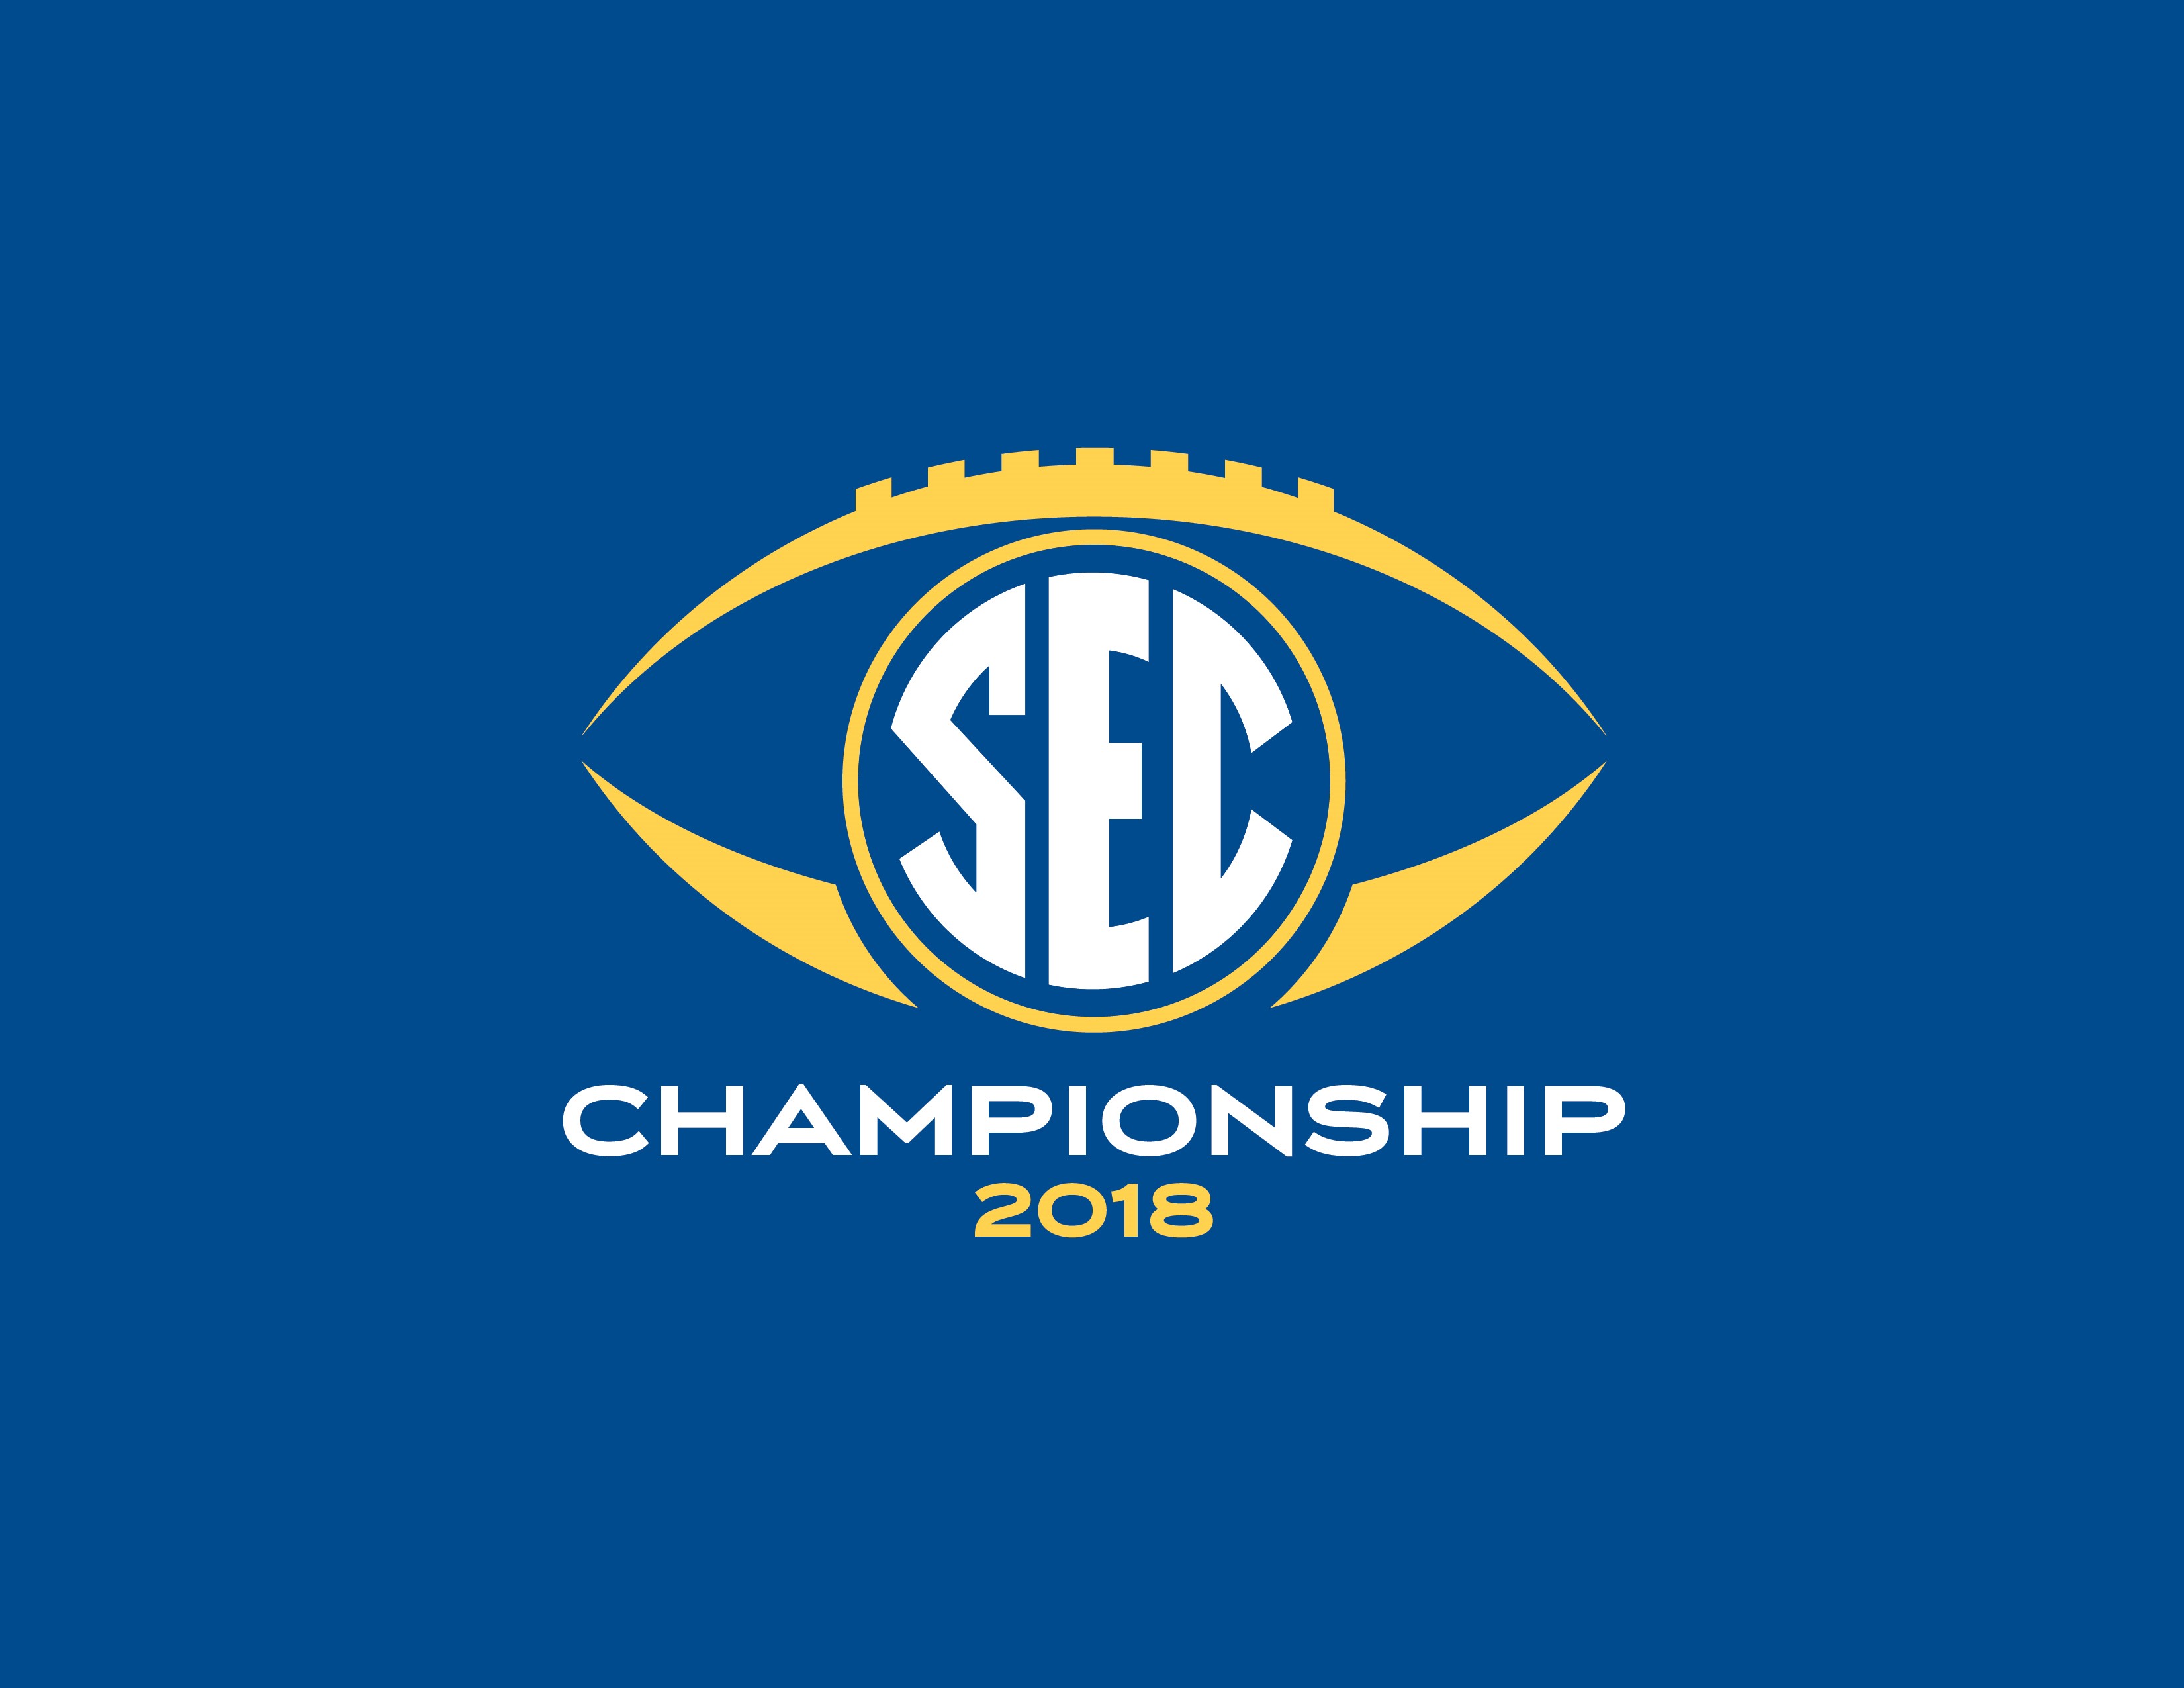 SEC Championship 2018 logo